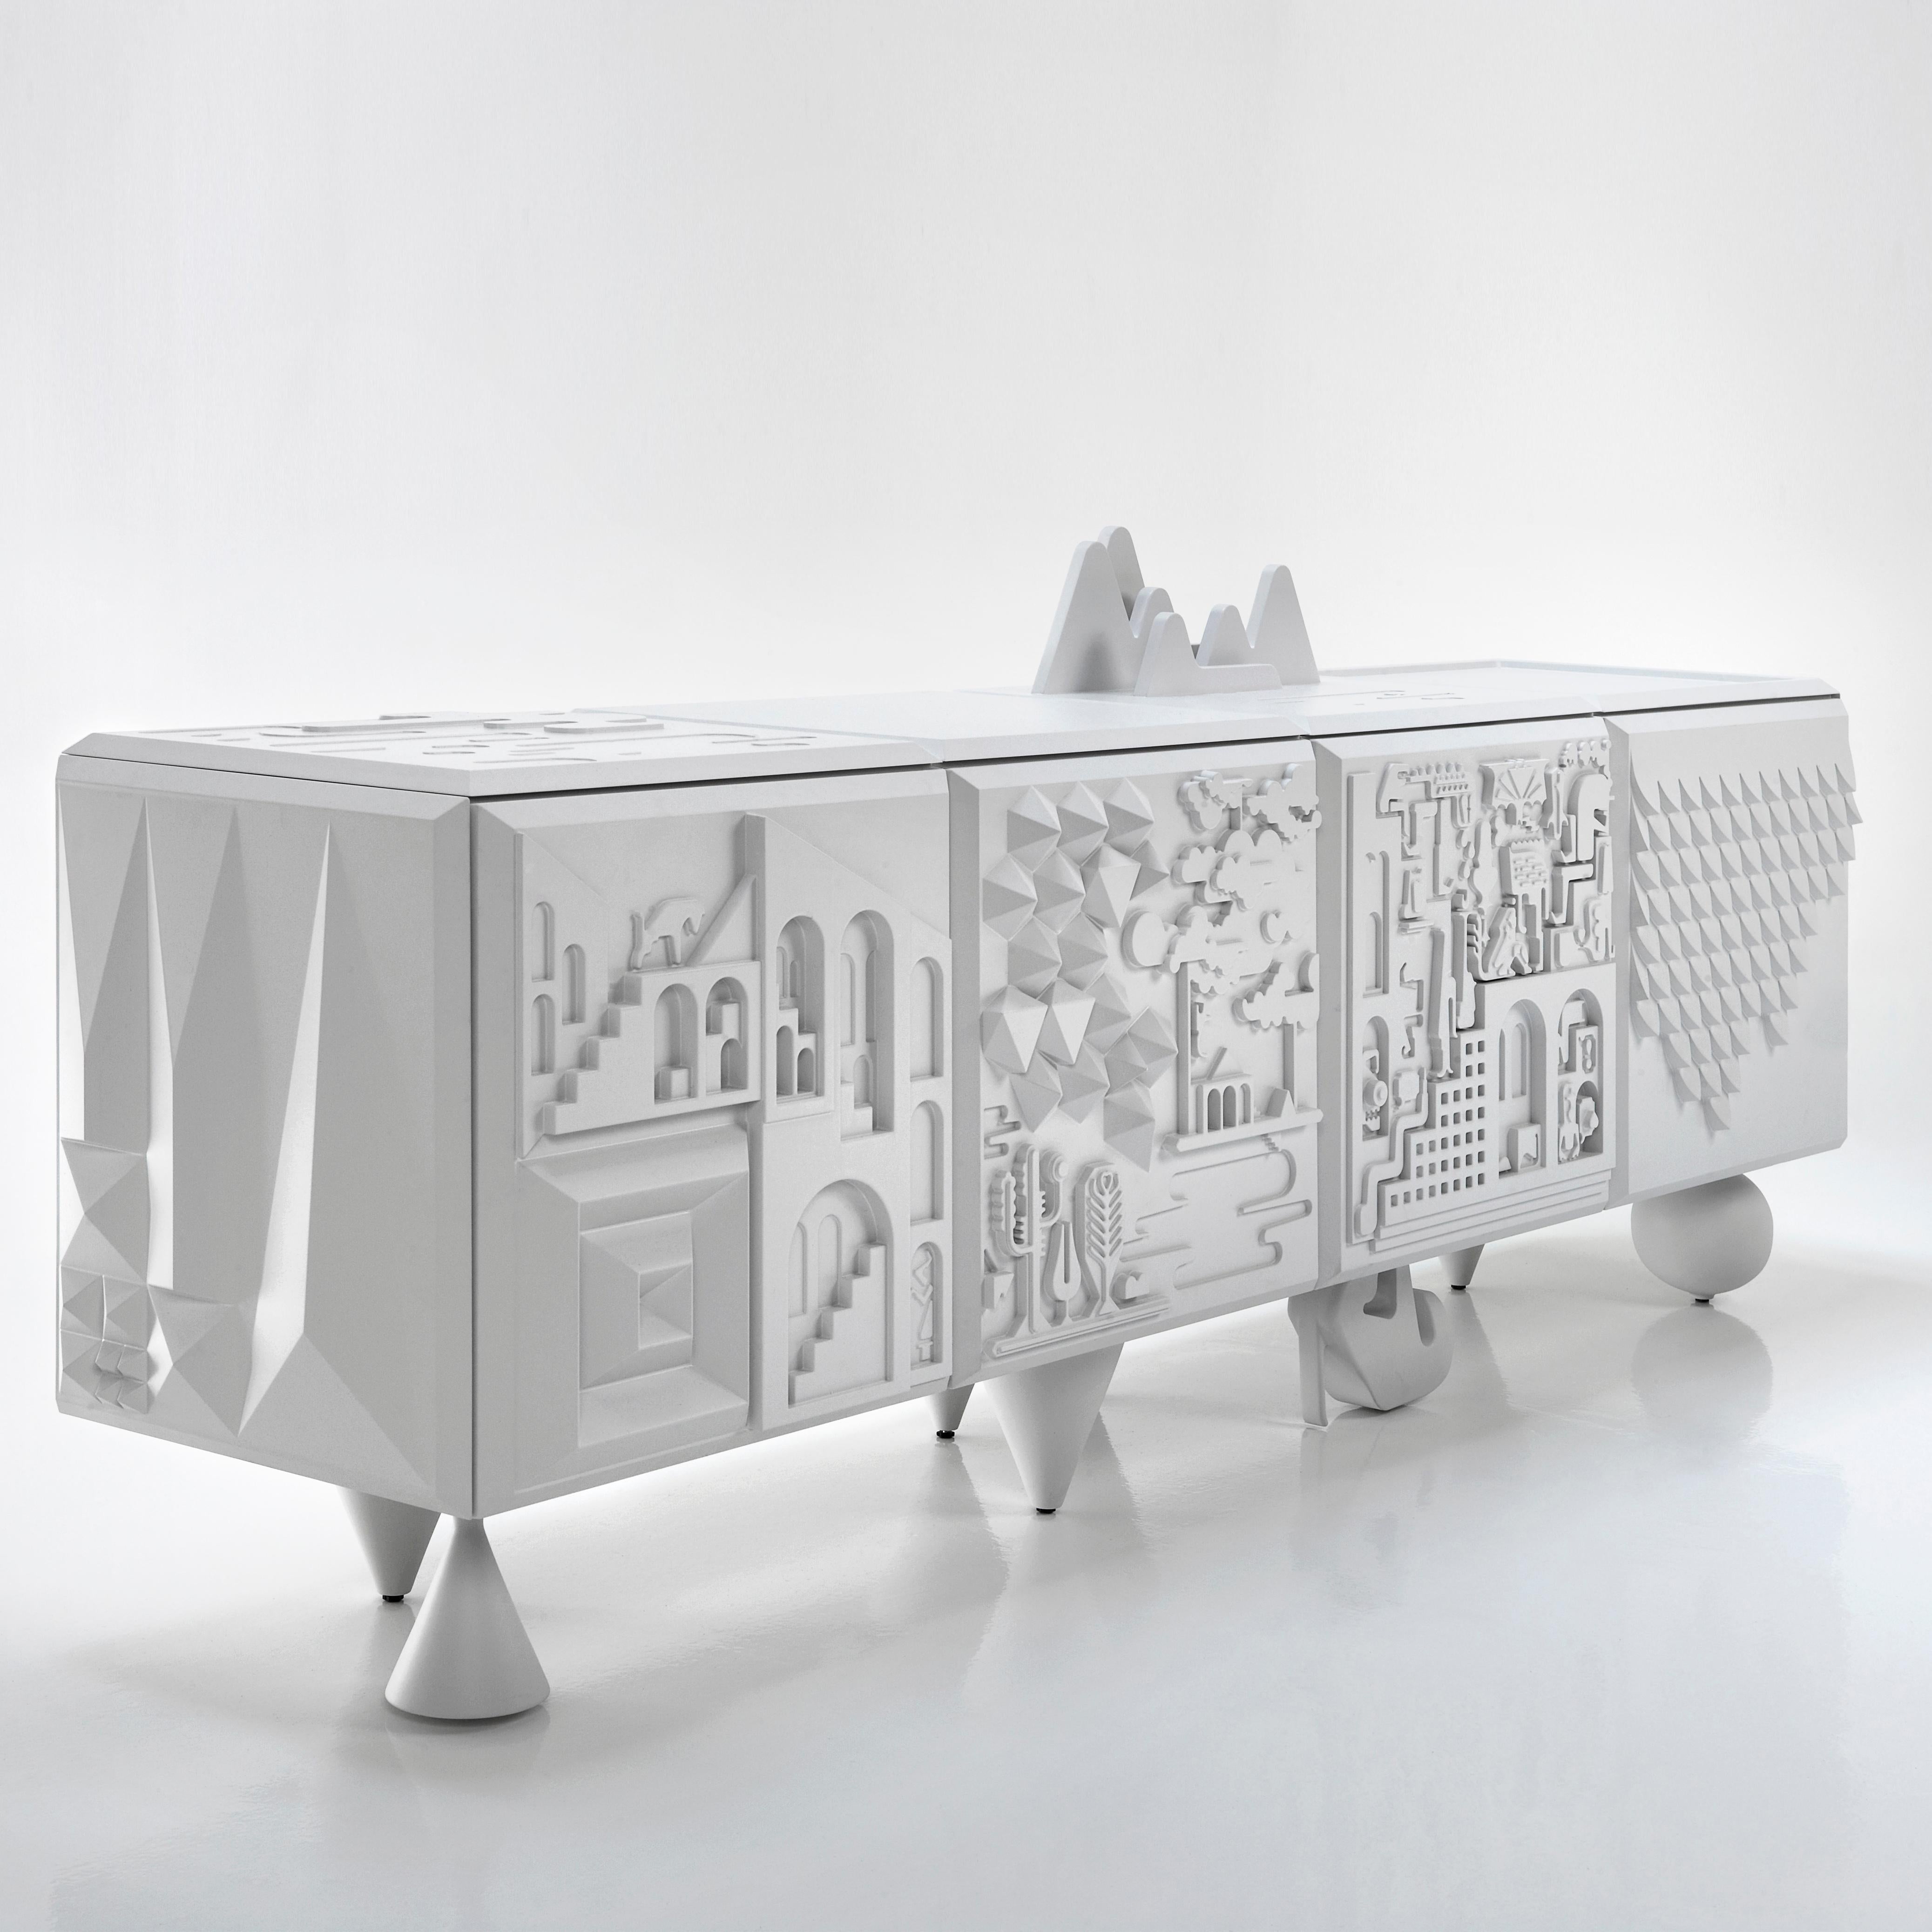 Spanish Antoine Et Manuel Contemporary 'Tout Va Bien' White Cabinet for Bd Barcelona For Sale